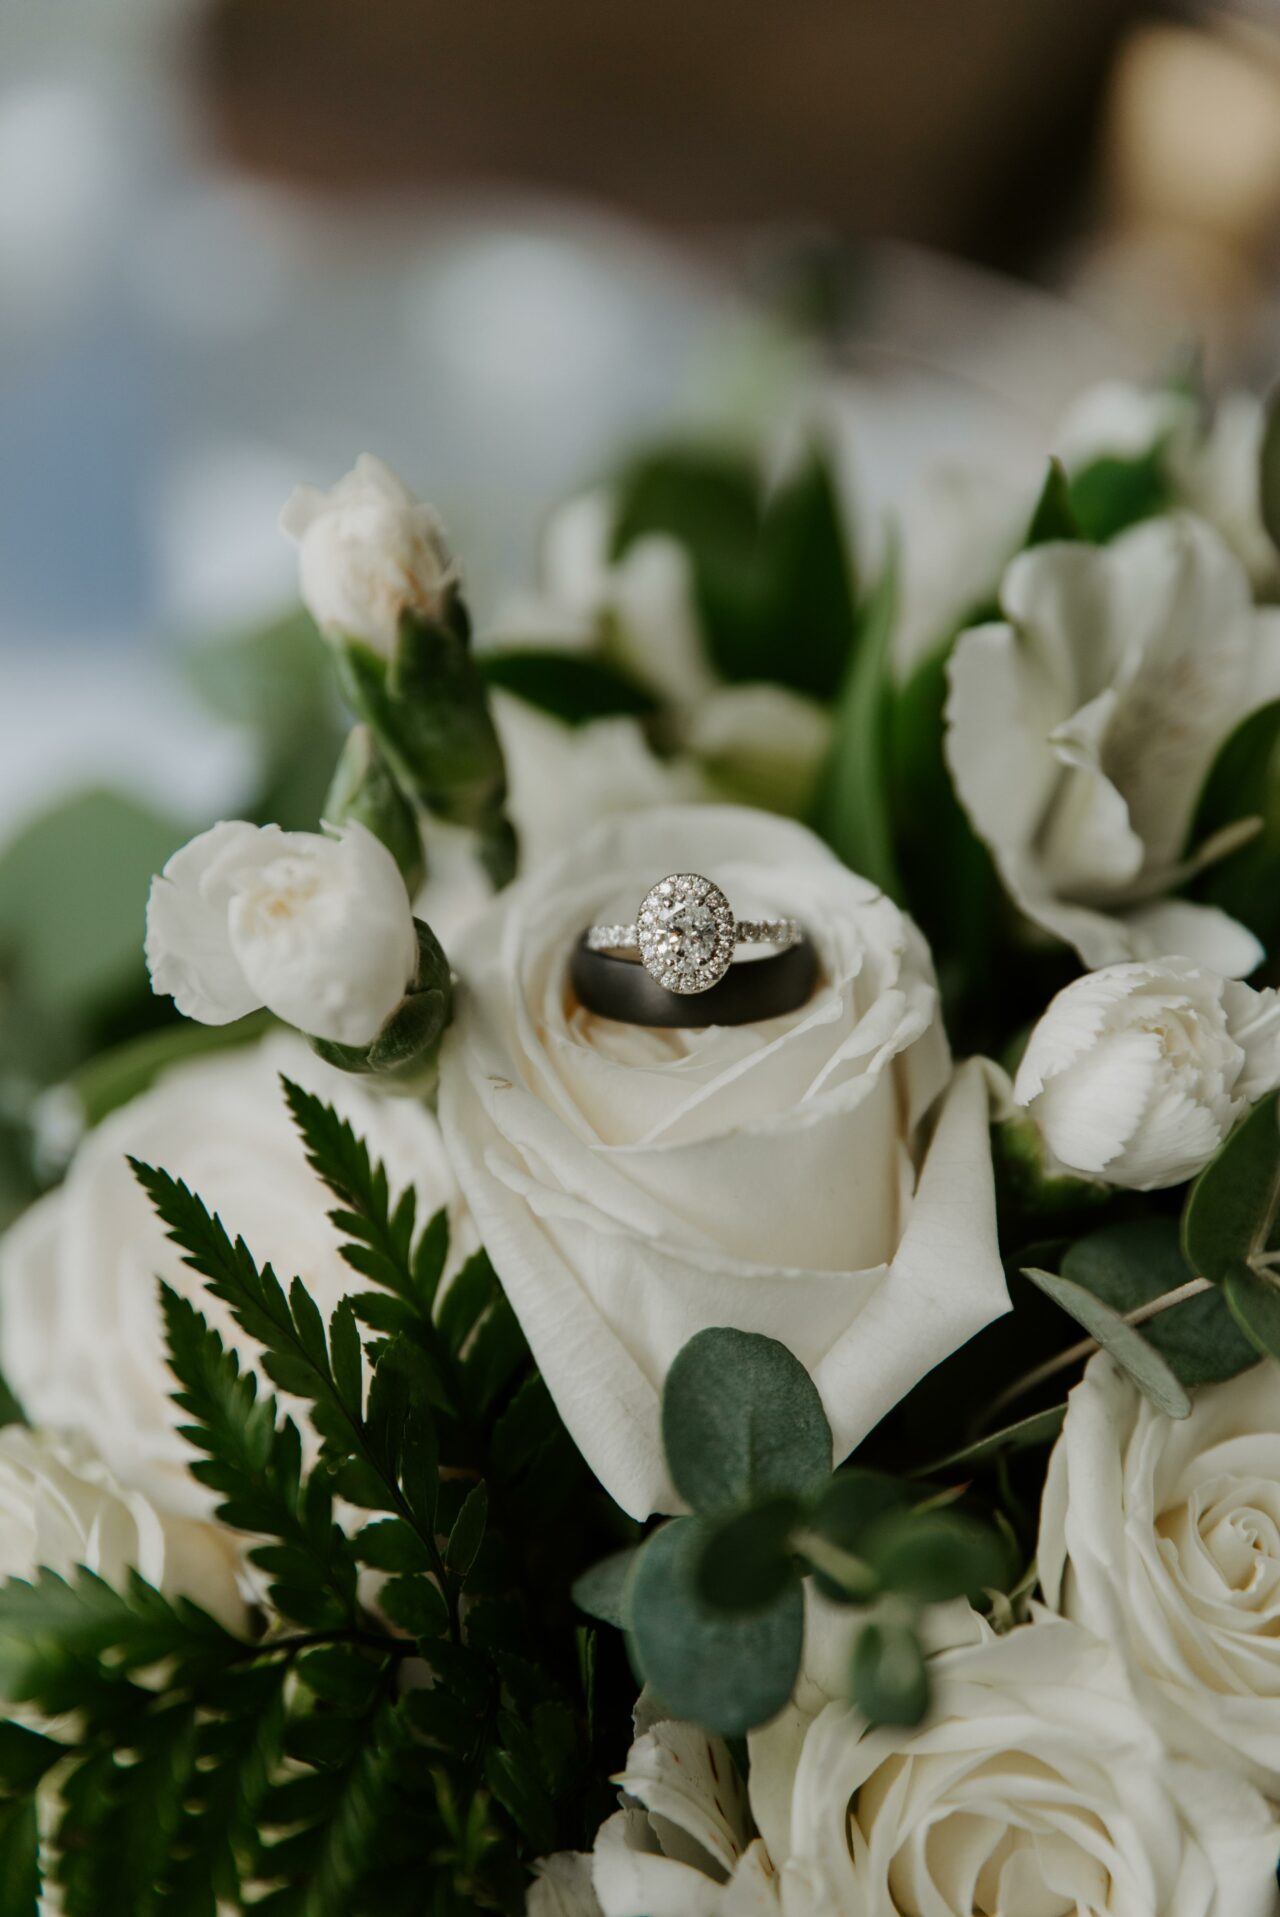 White flowers, wedding rings